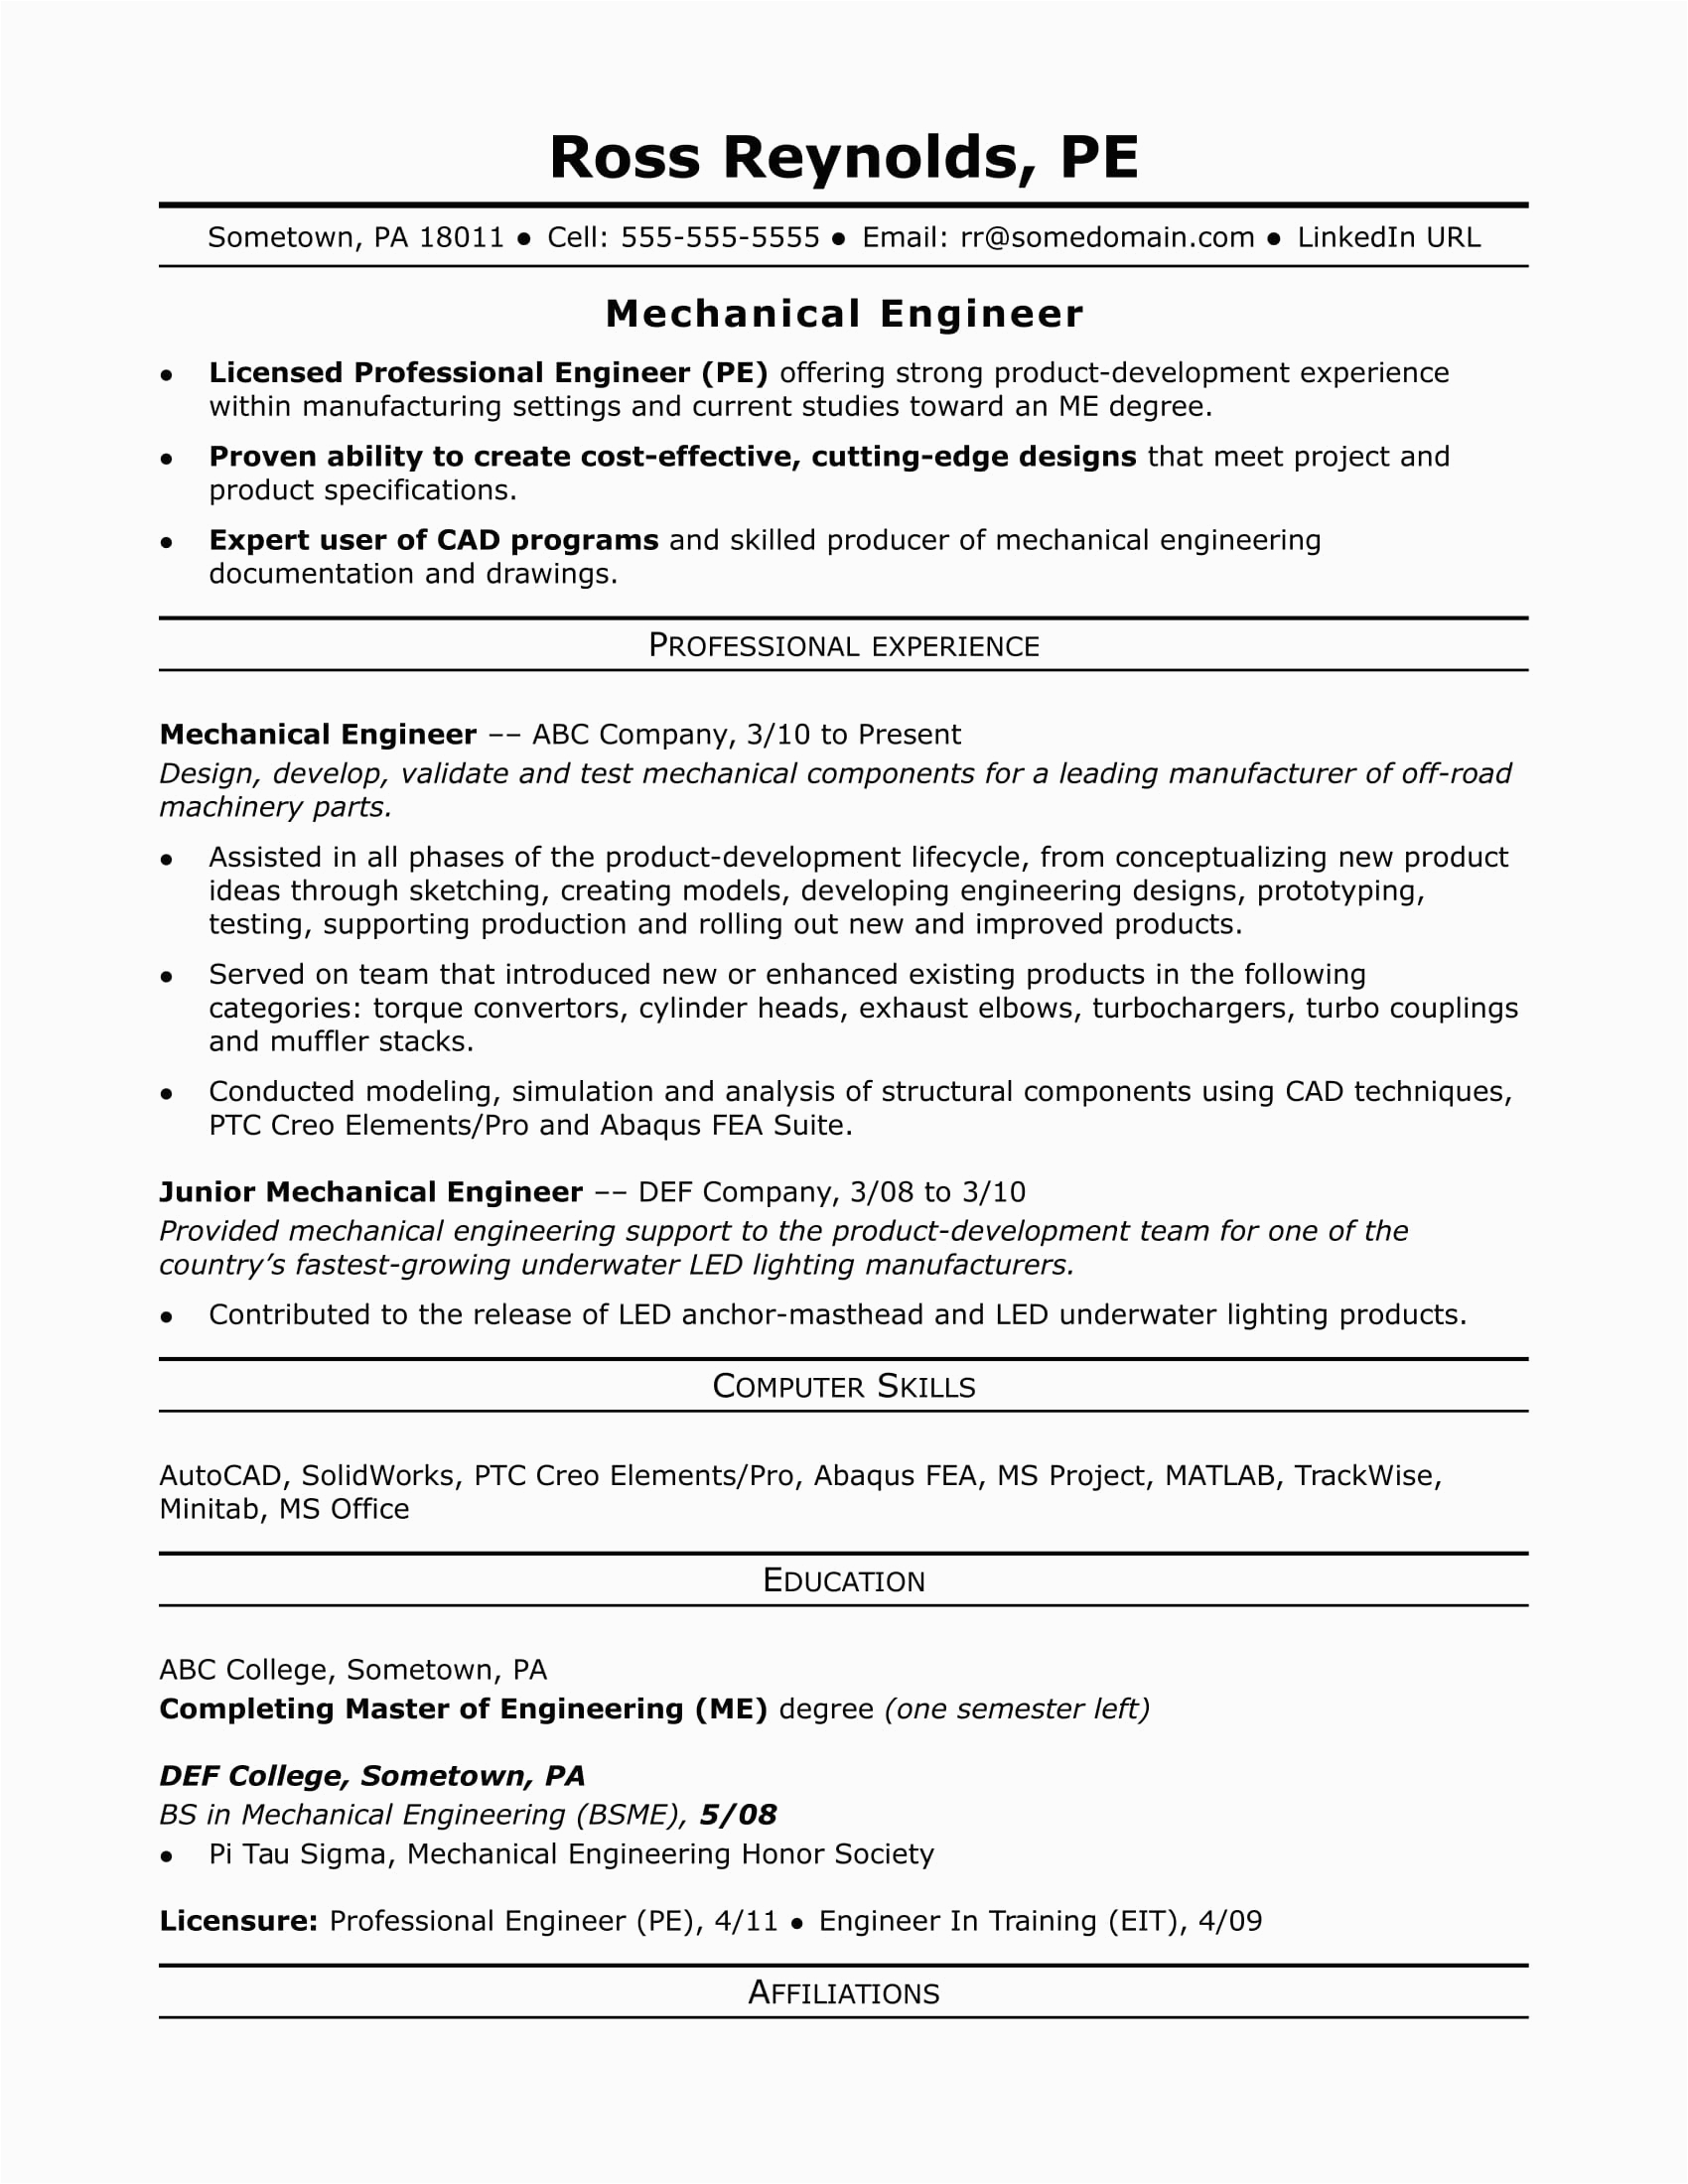 Sample Resume for Mechanical Design Engineer with Experience Sample Resume for A Midlevel Mechanical Engineer